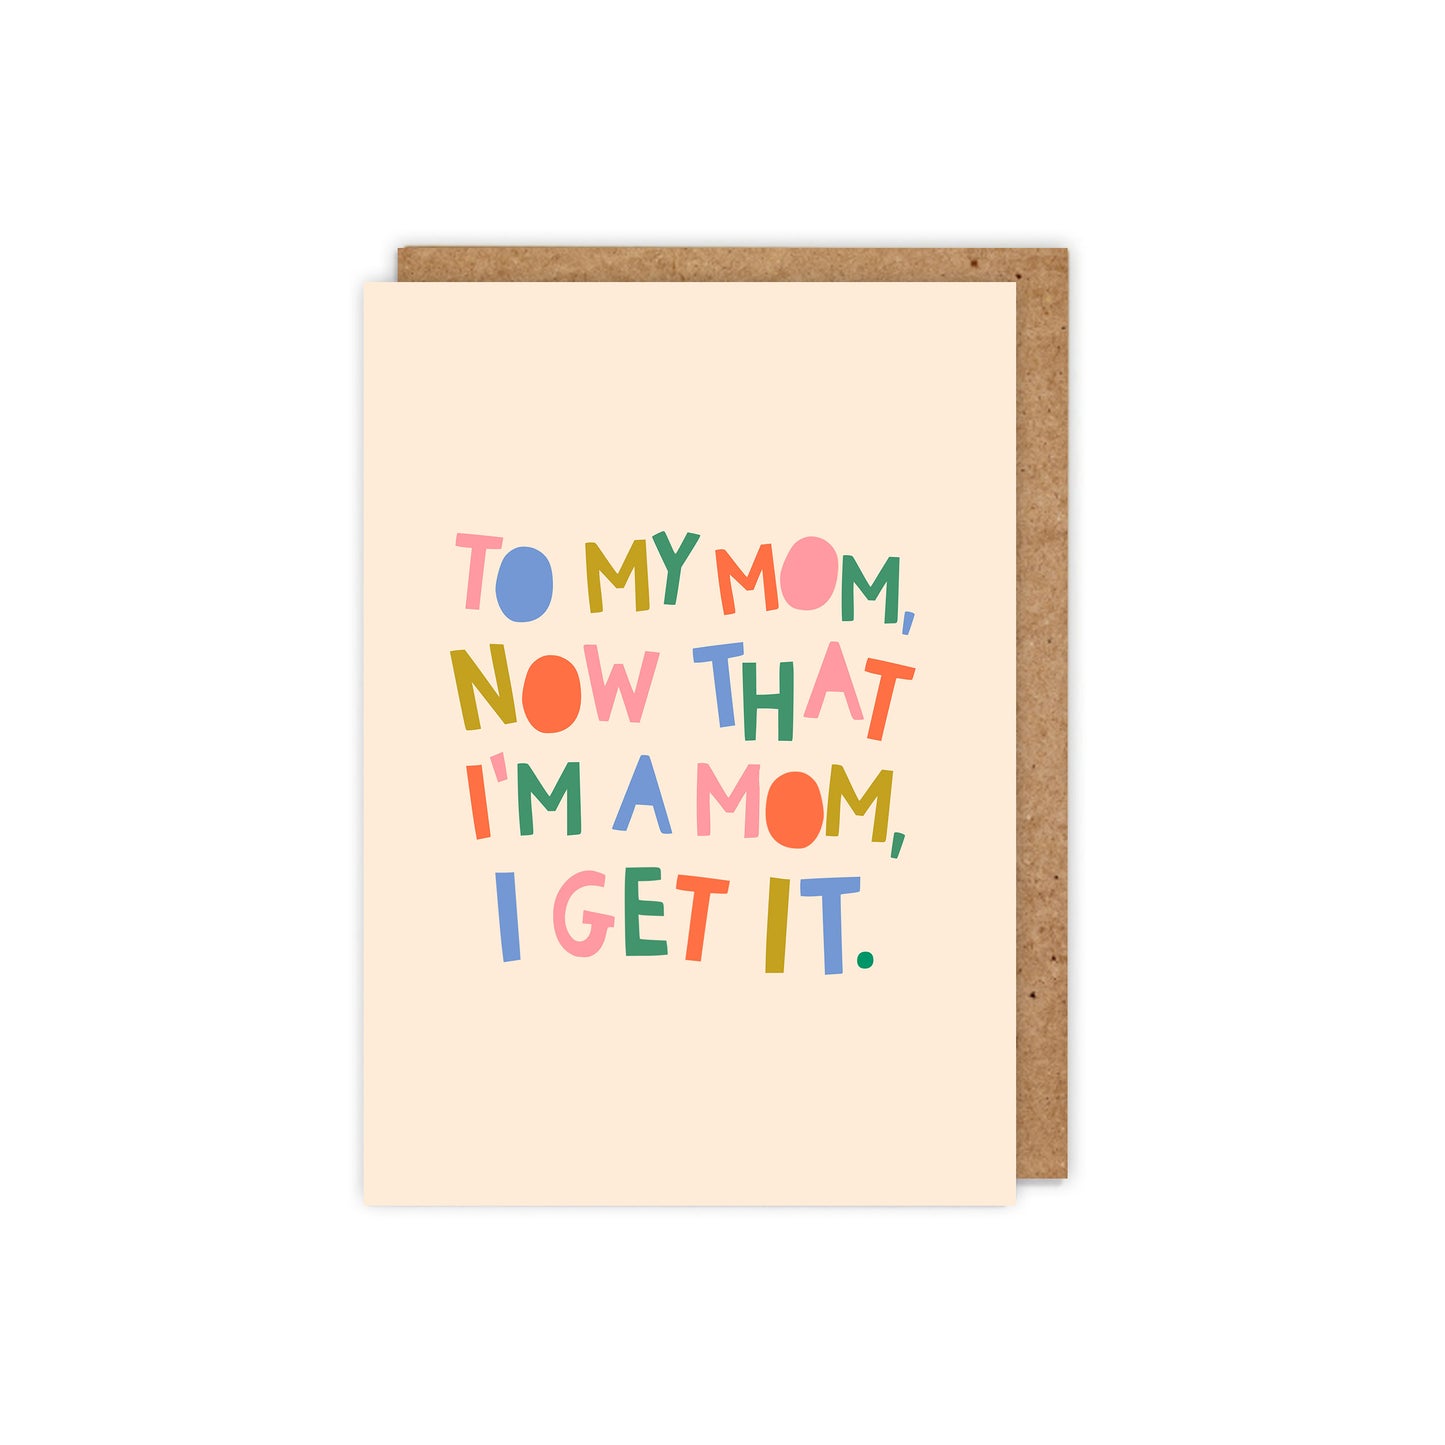 To My Mum / Mom..., I get it. Card